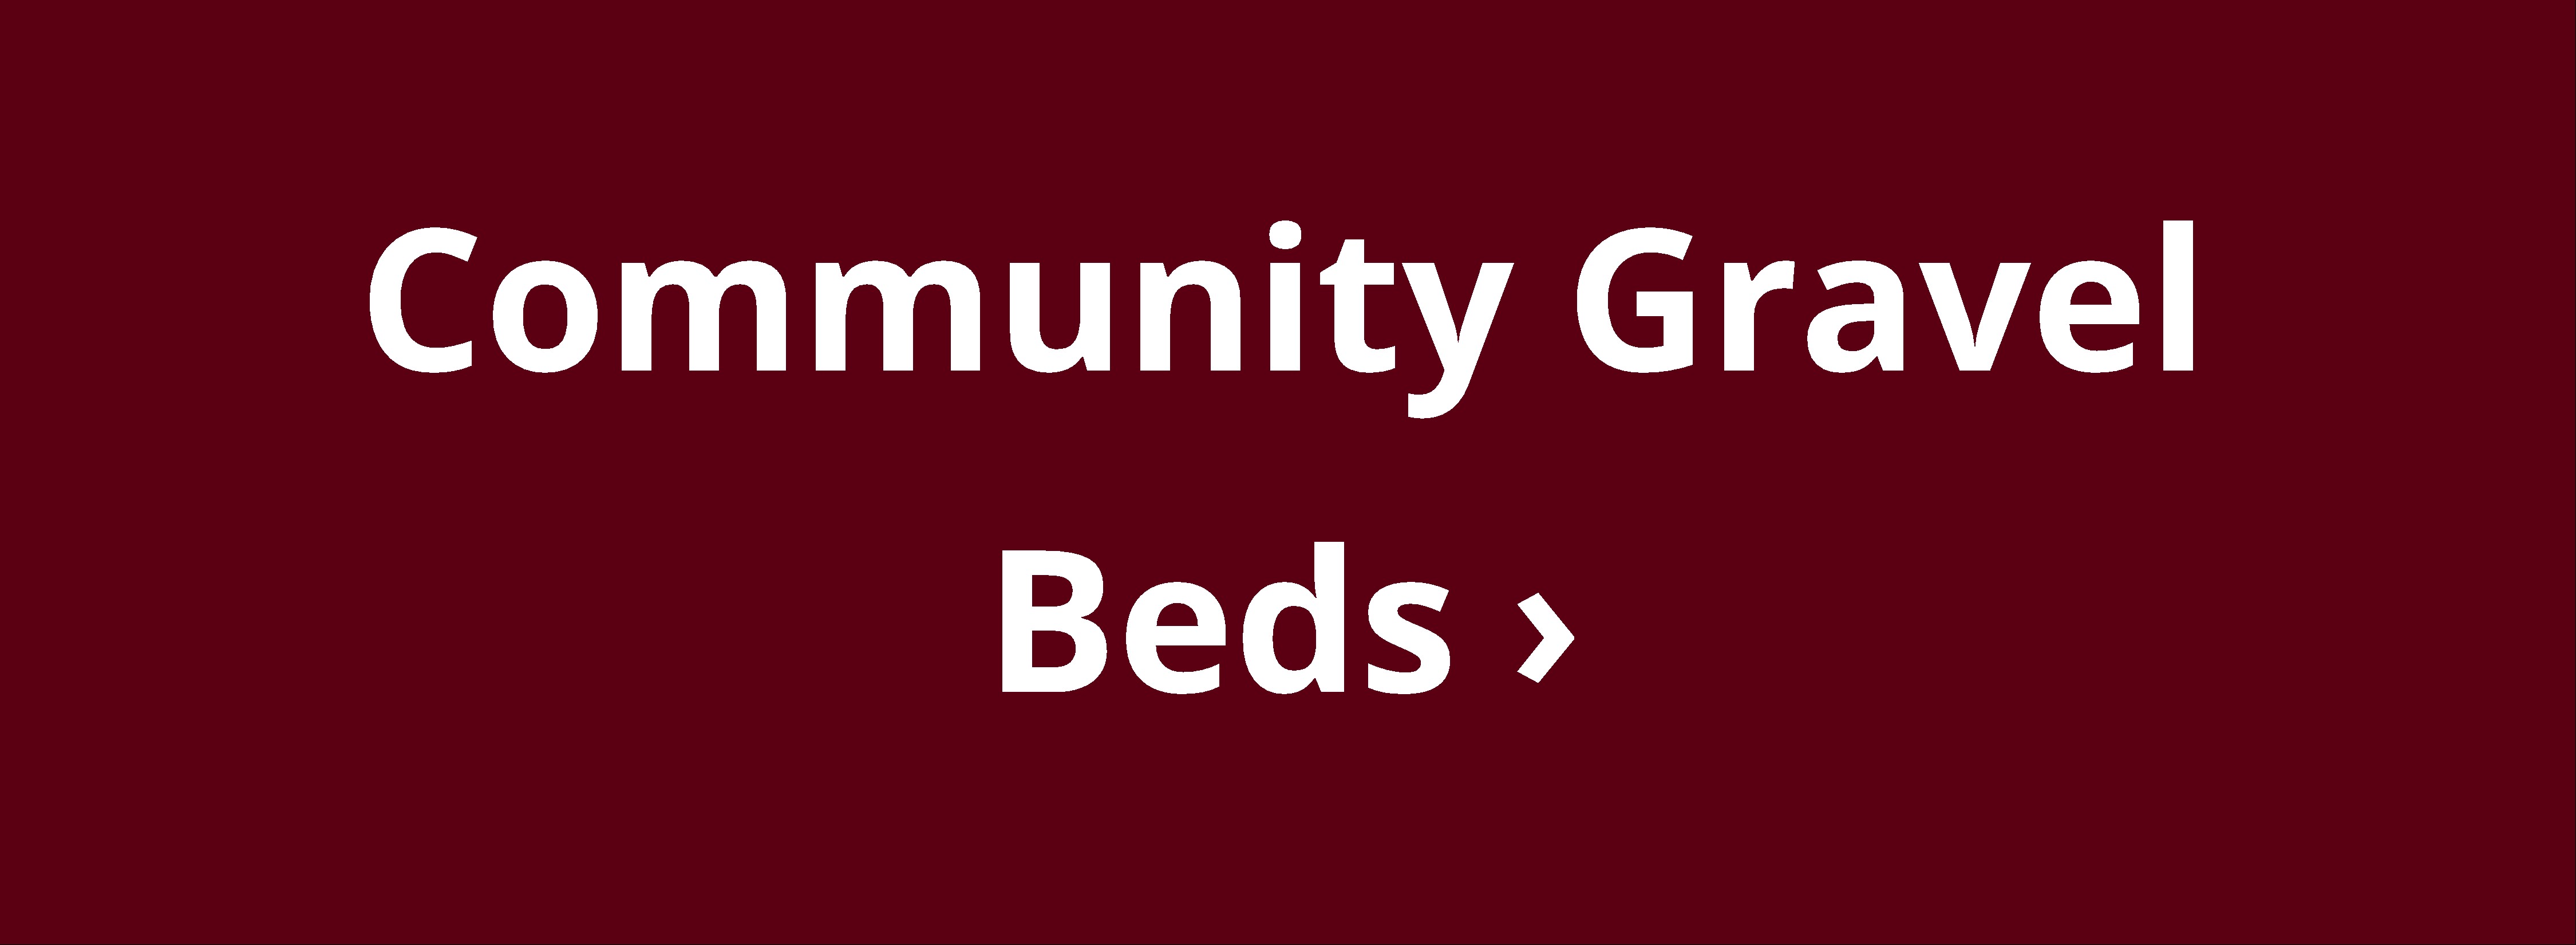 community gravel beds